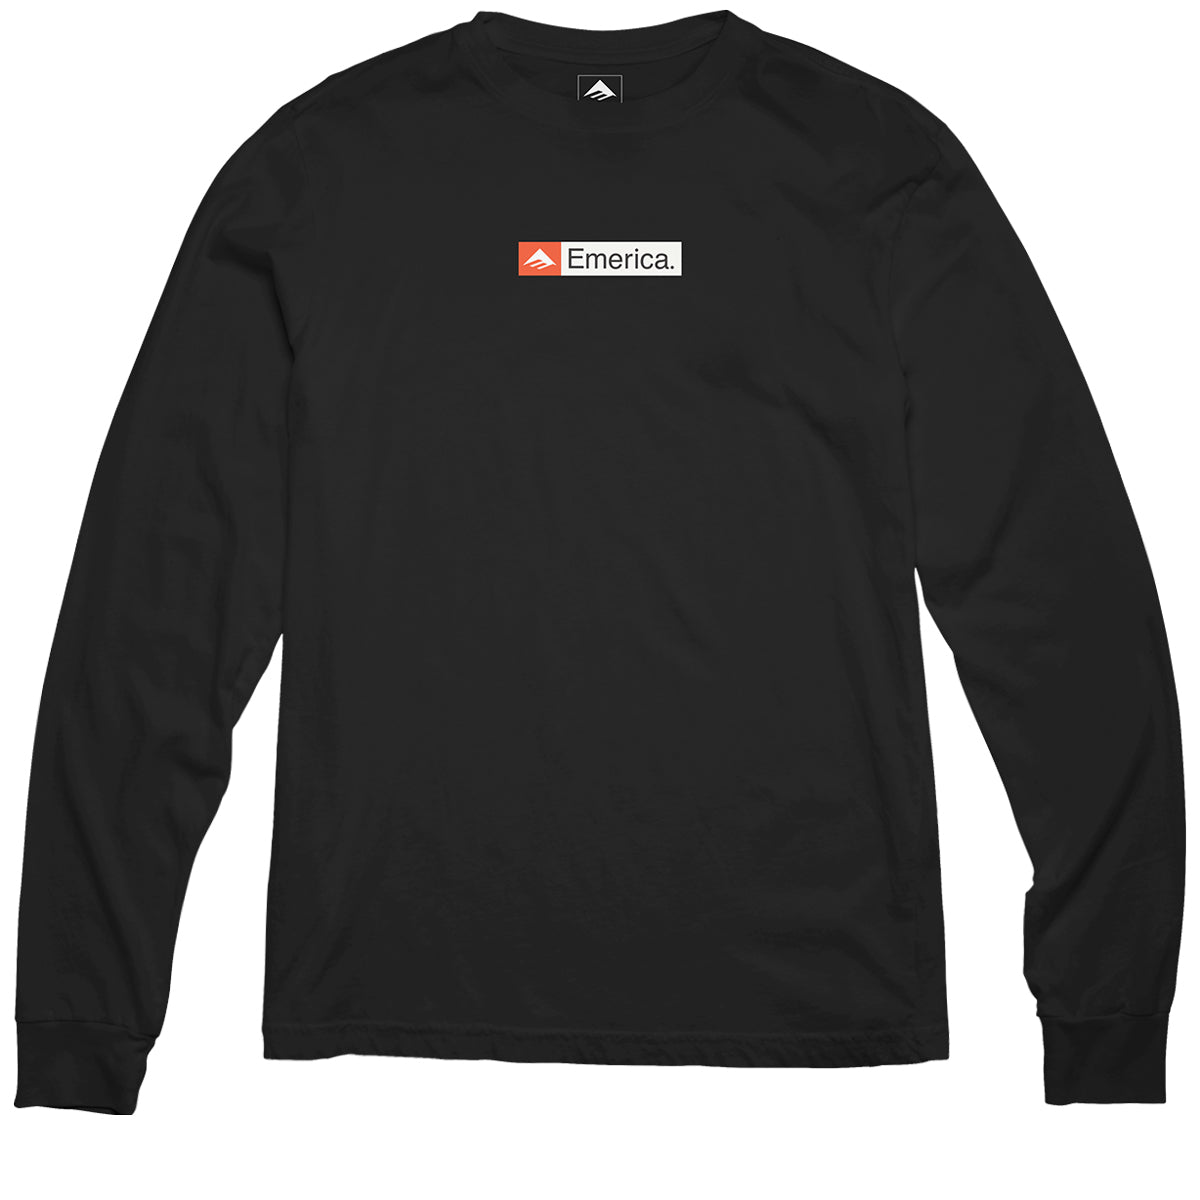 Emerica Biltwell Long Sleeve T-Shirt - Black image 2